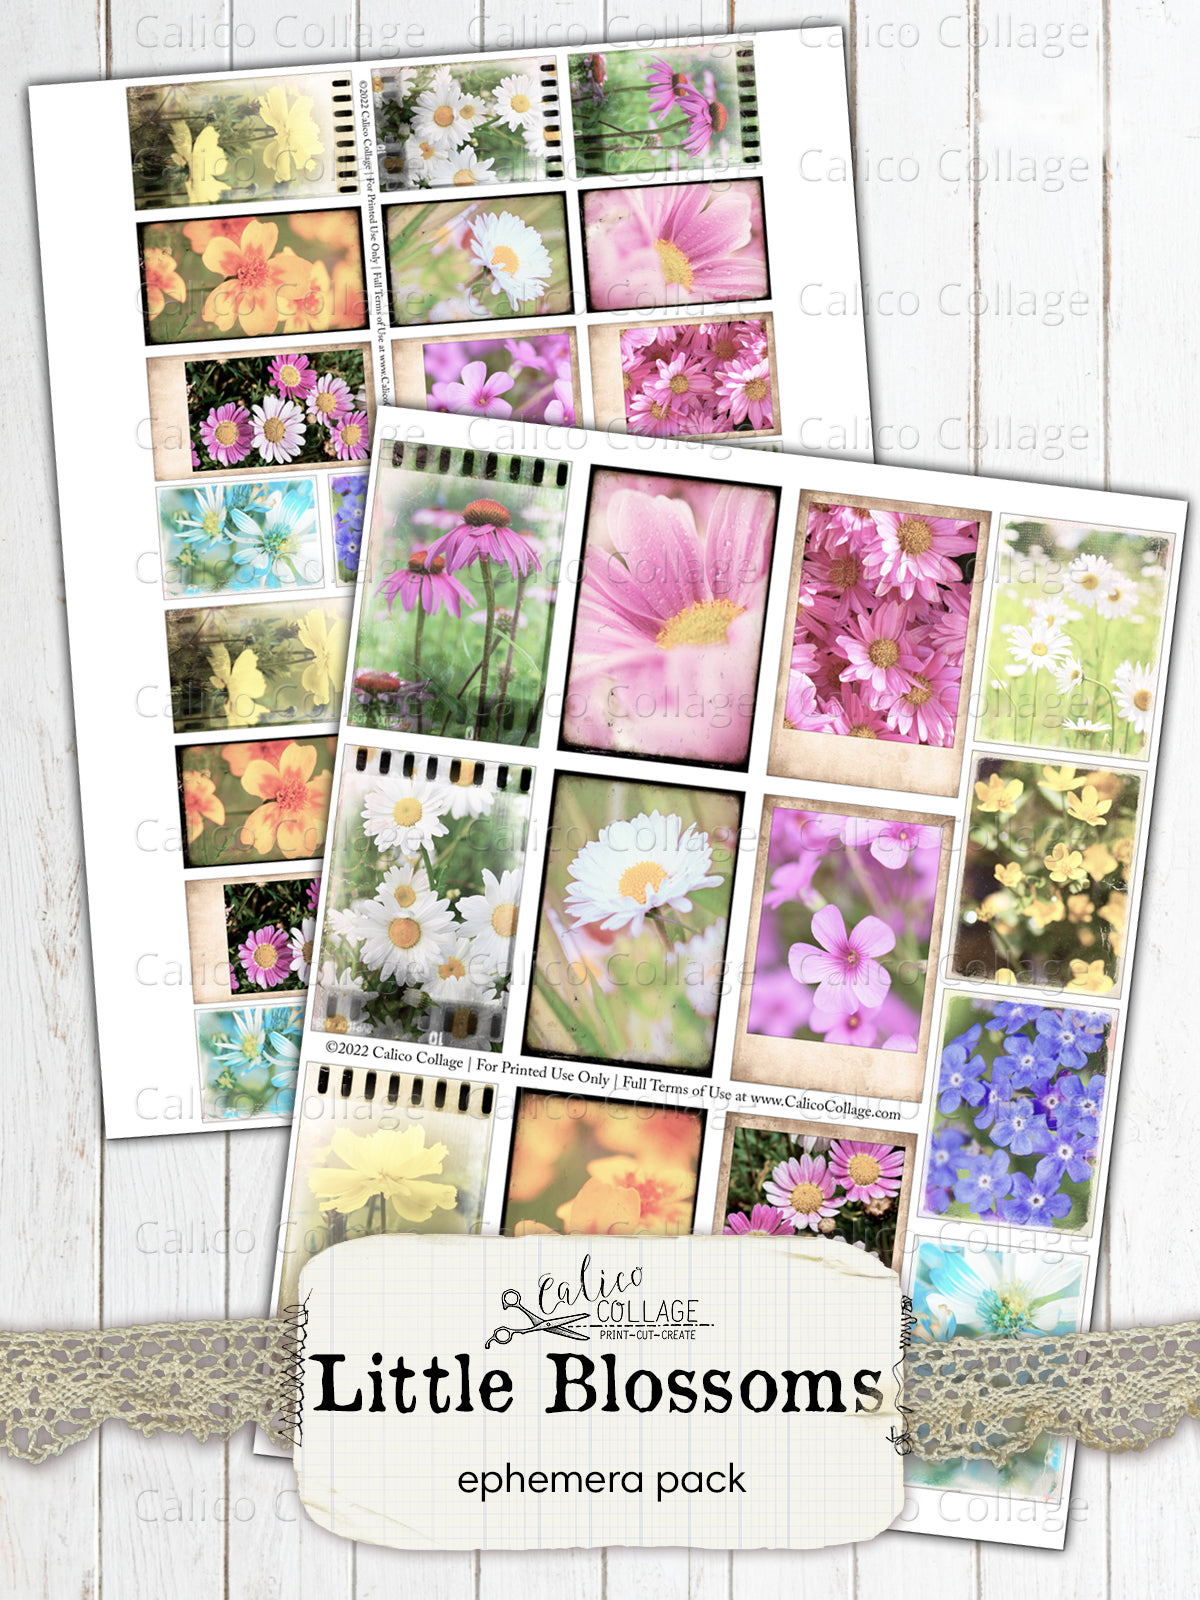 Floral Polaroids Pictures, Junk Journal Supplies